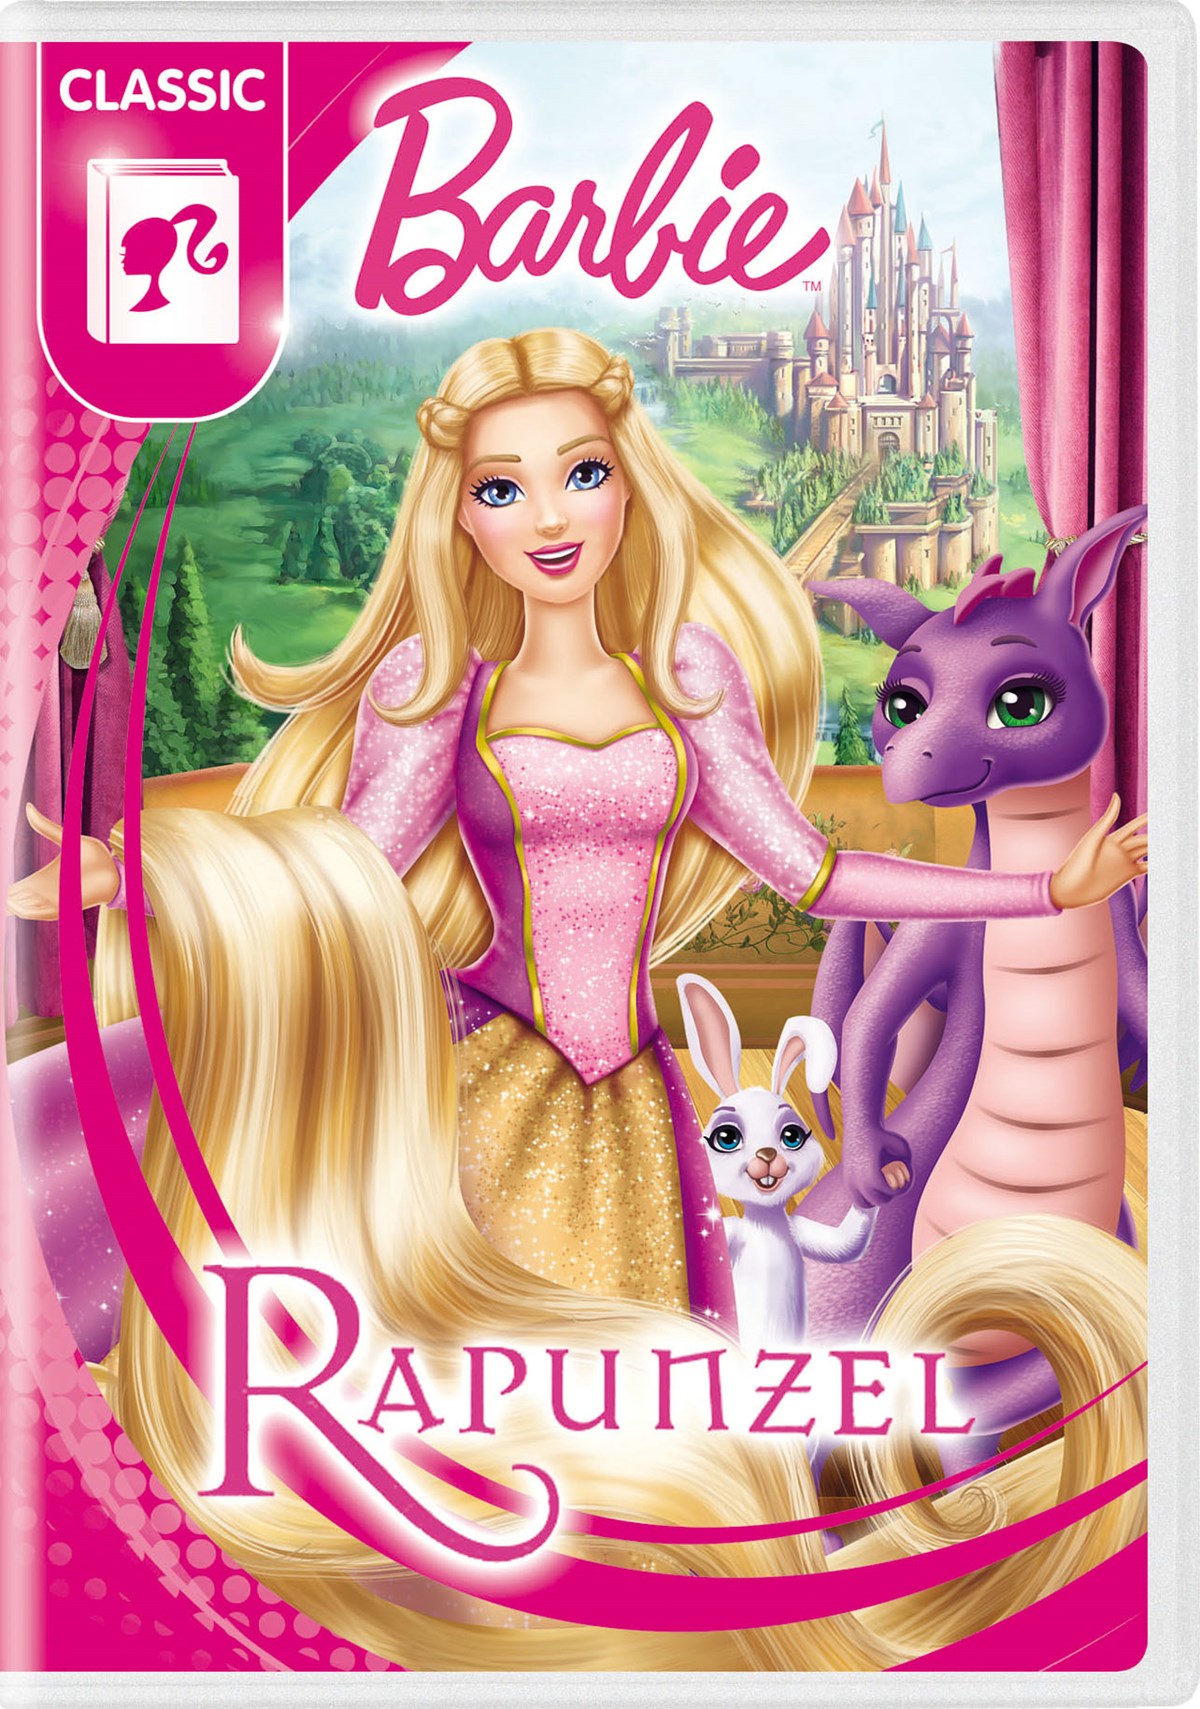 Barbie, princesse Raiponce [DVD] (DVD), Kelly Sheridan, DVD